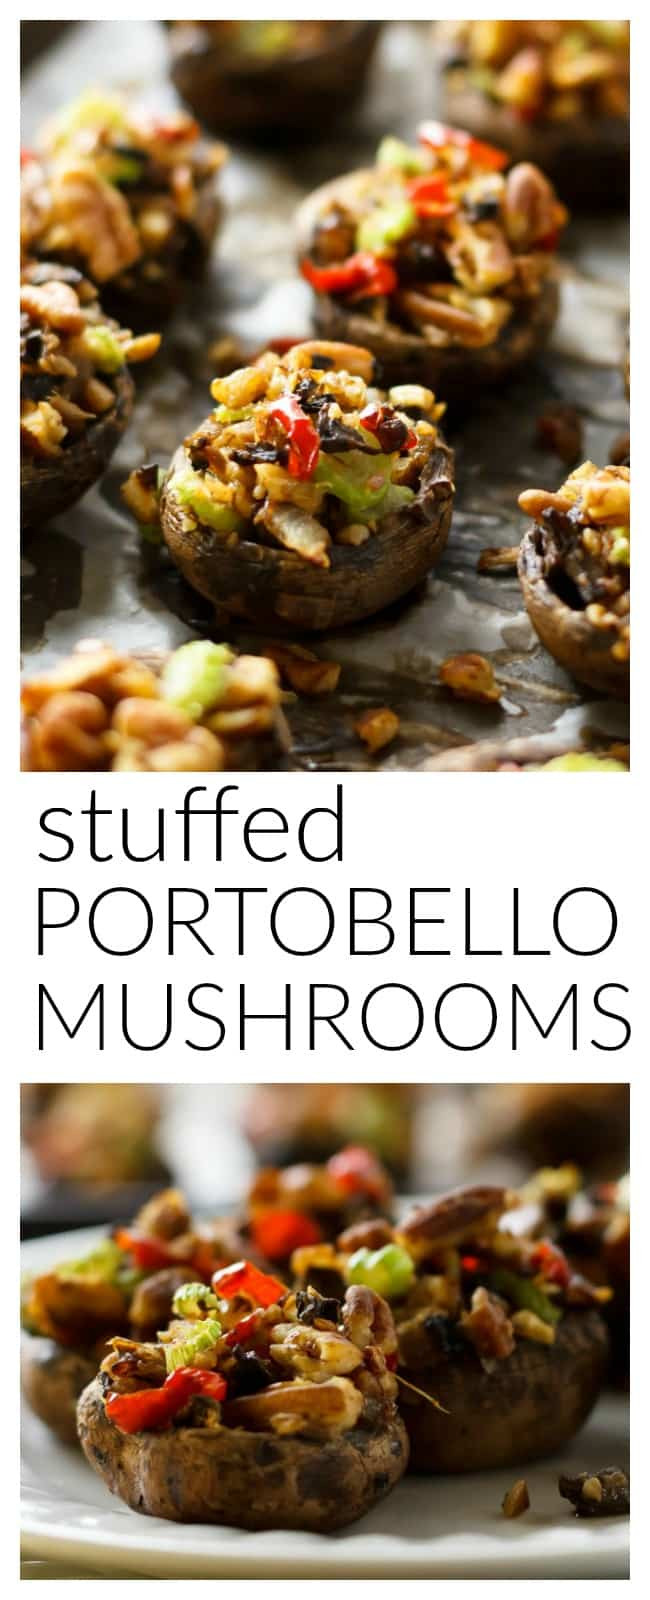 Vegan Mushroom Recipes
 Vegan Stuffed Portobello Mushrooms